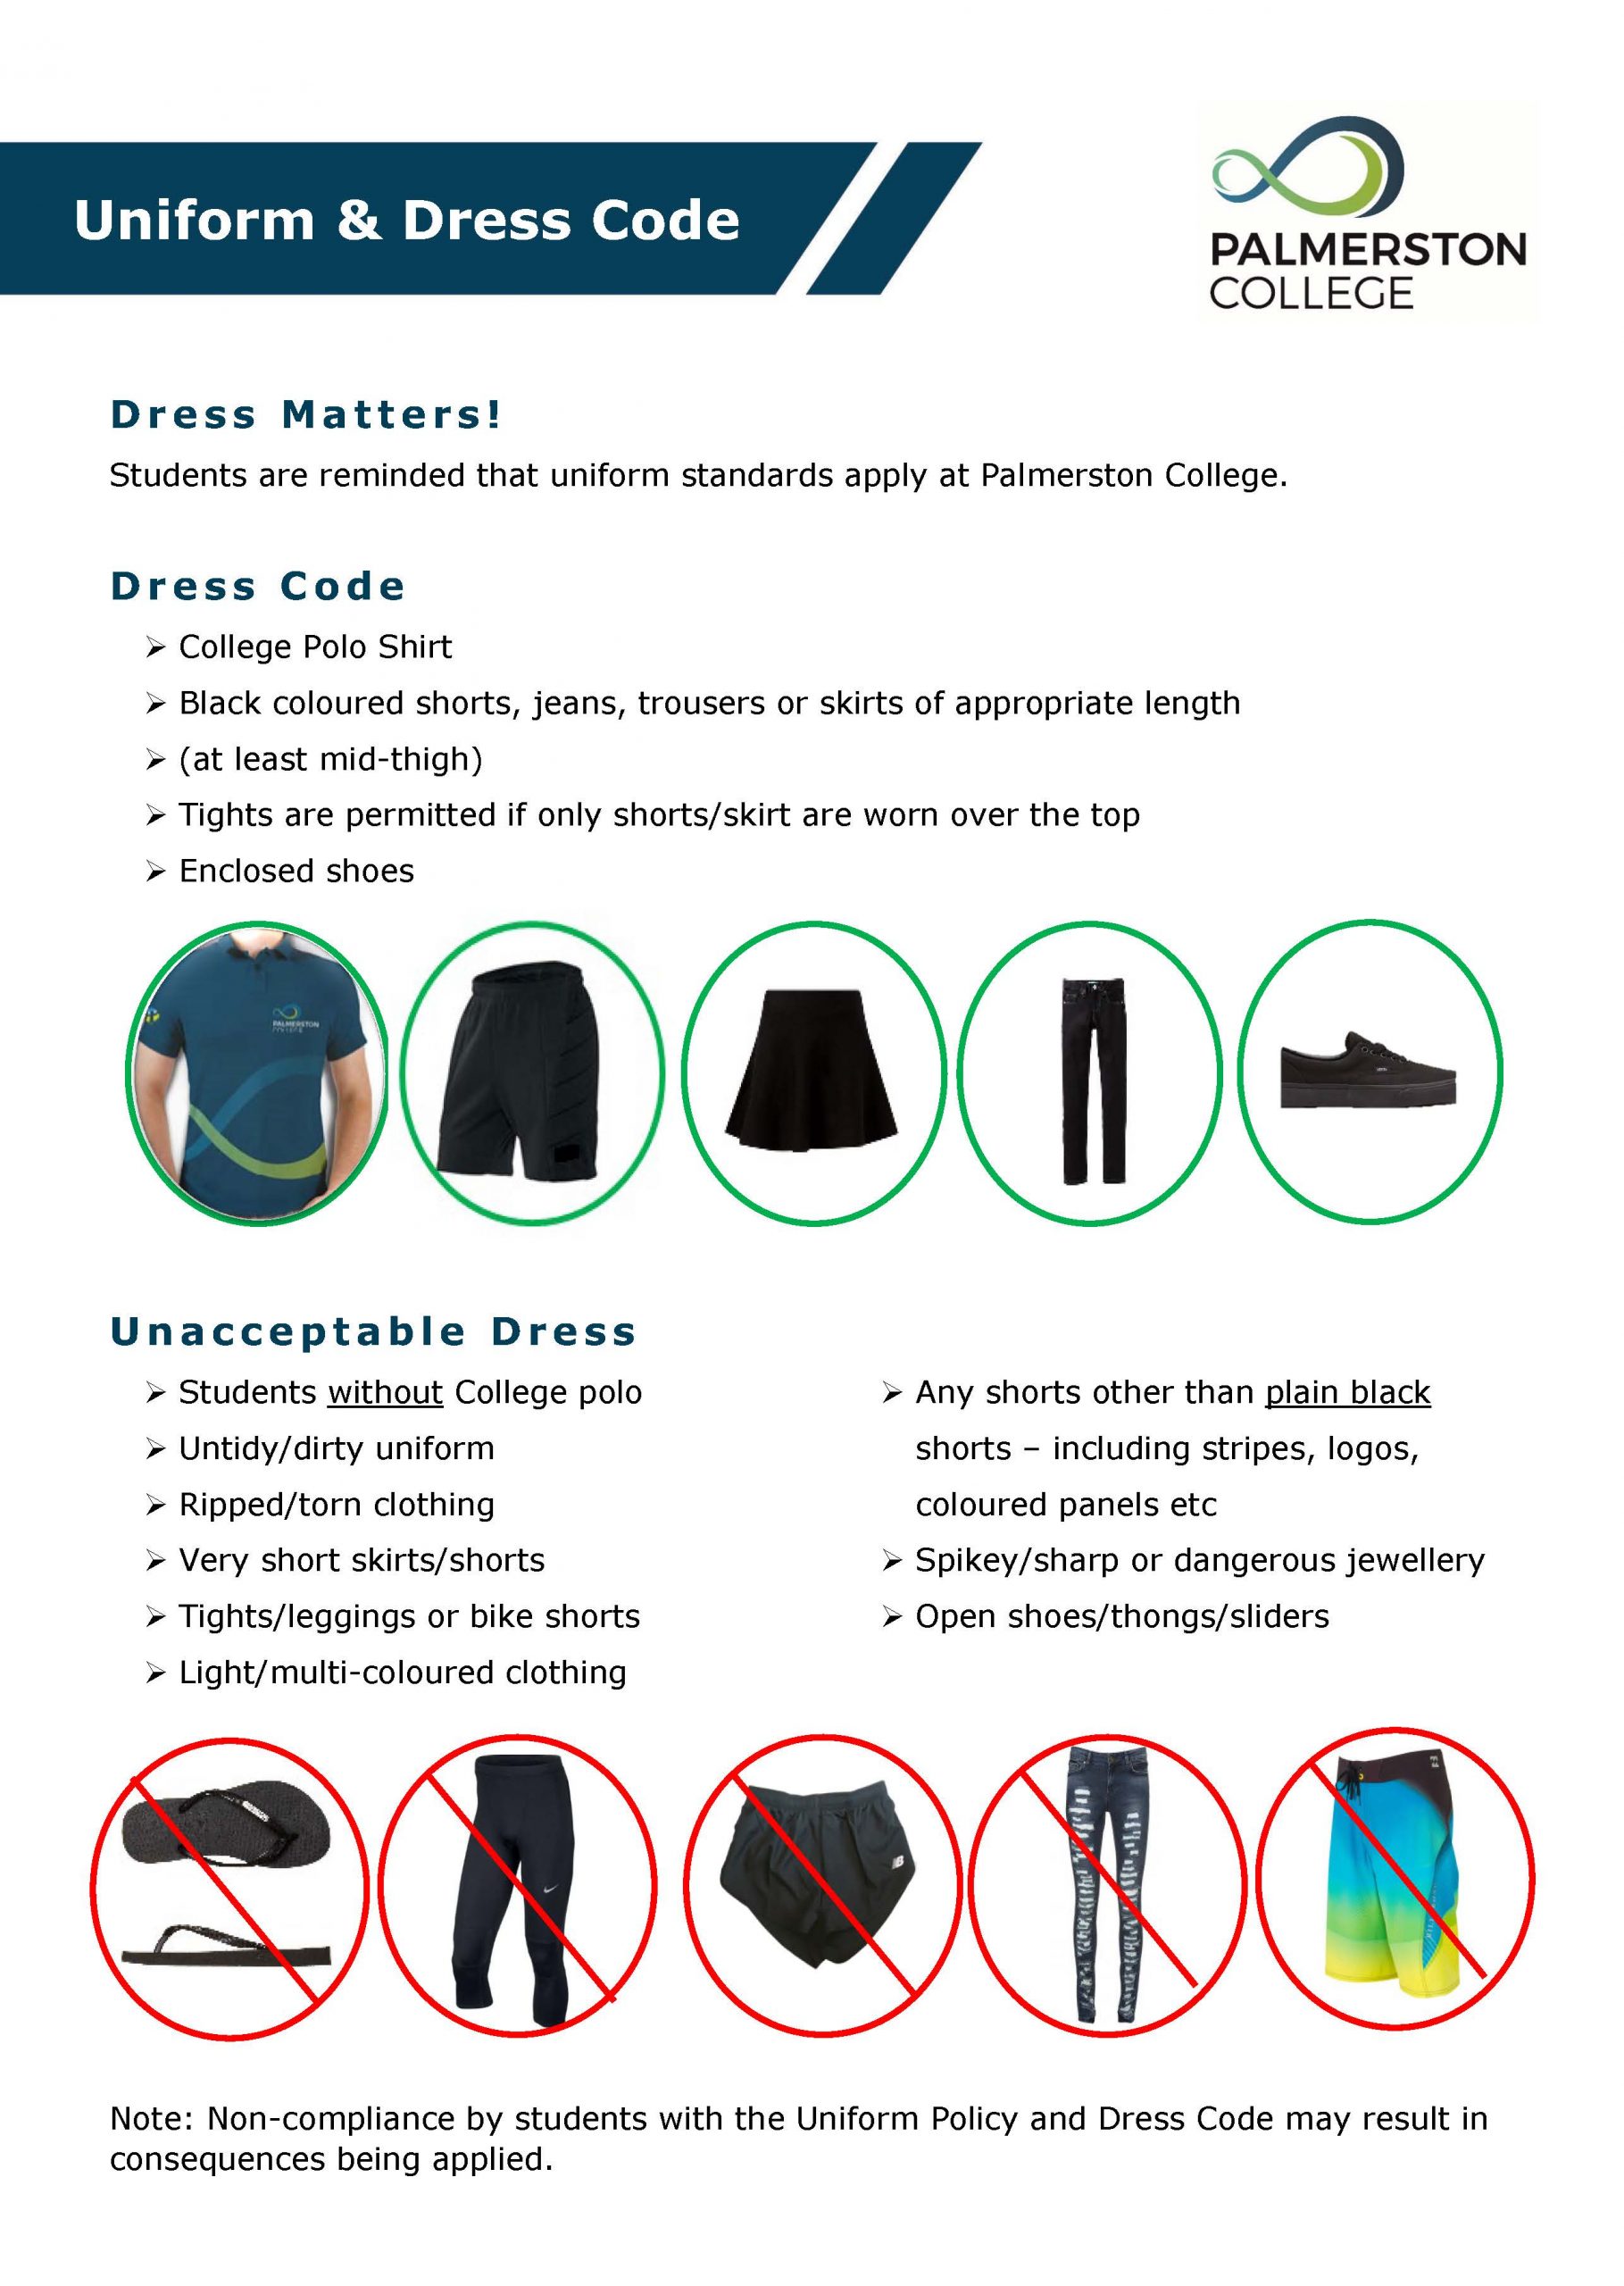 poster presentation dress code